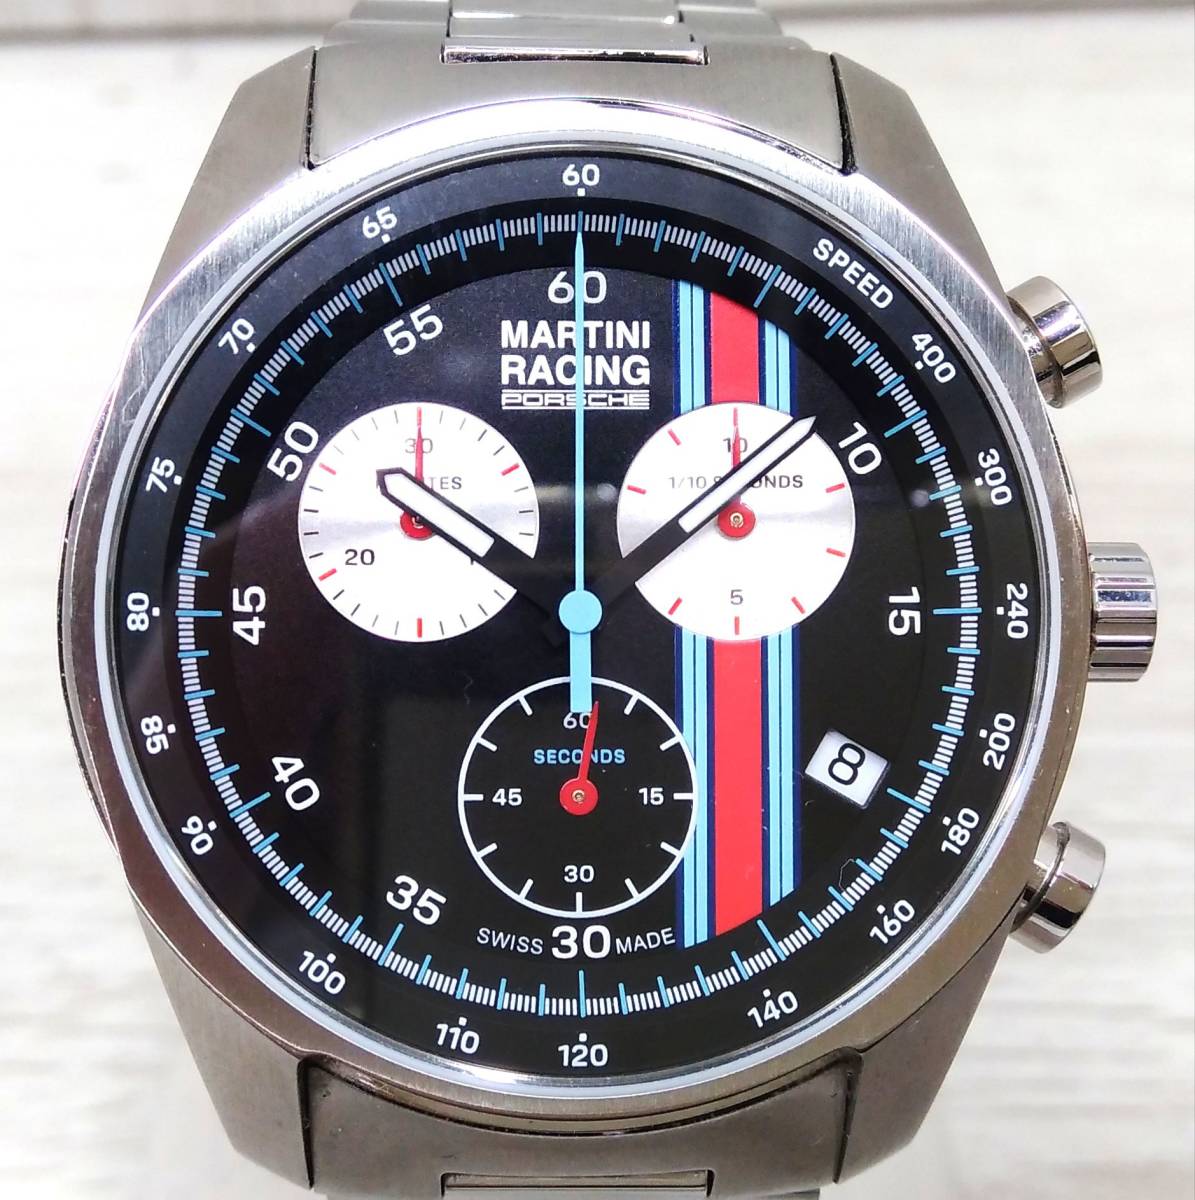 Porsche Watch ポルシェ デザイン スポーツ クロノグラフ マルティニ レーシング ブラック / スチール クォーツ 腕時計 箱・取説あり_画像1